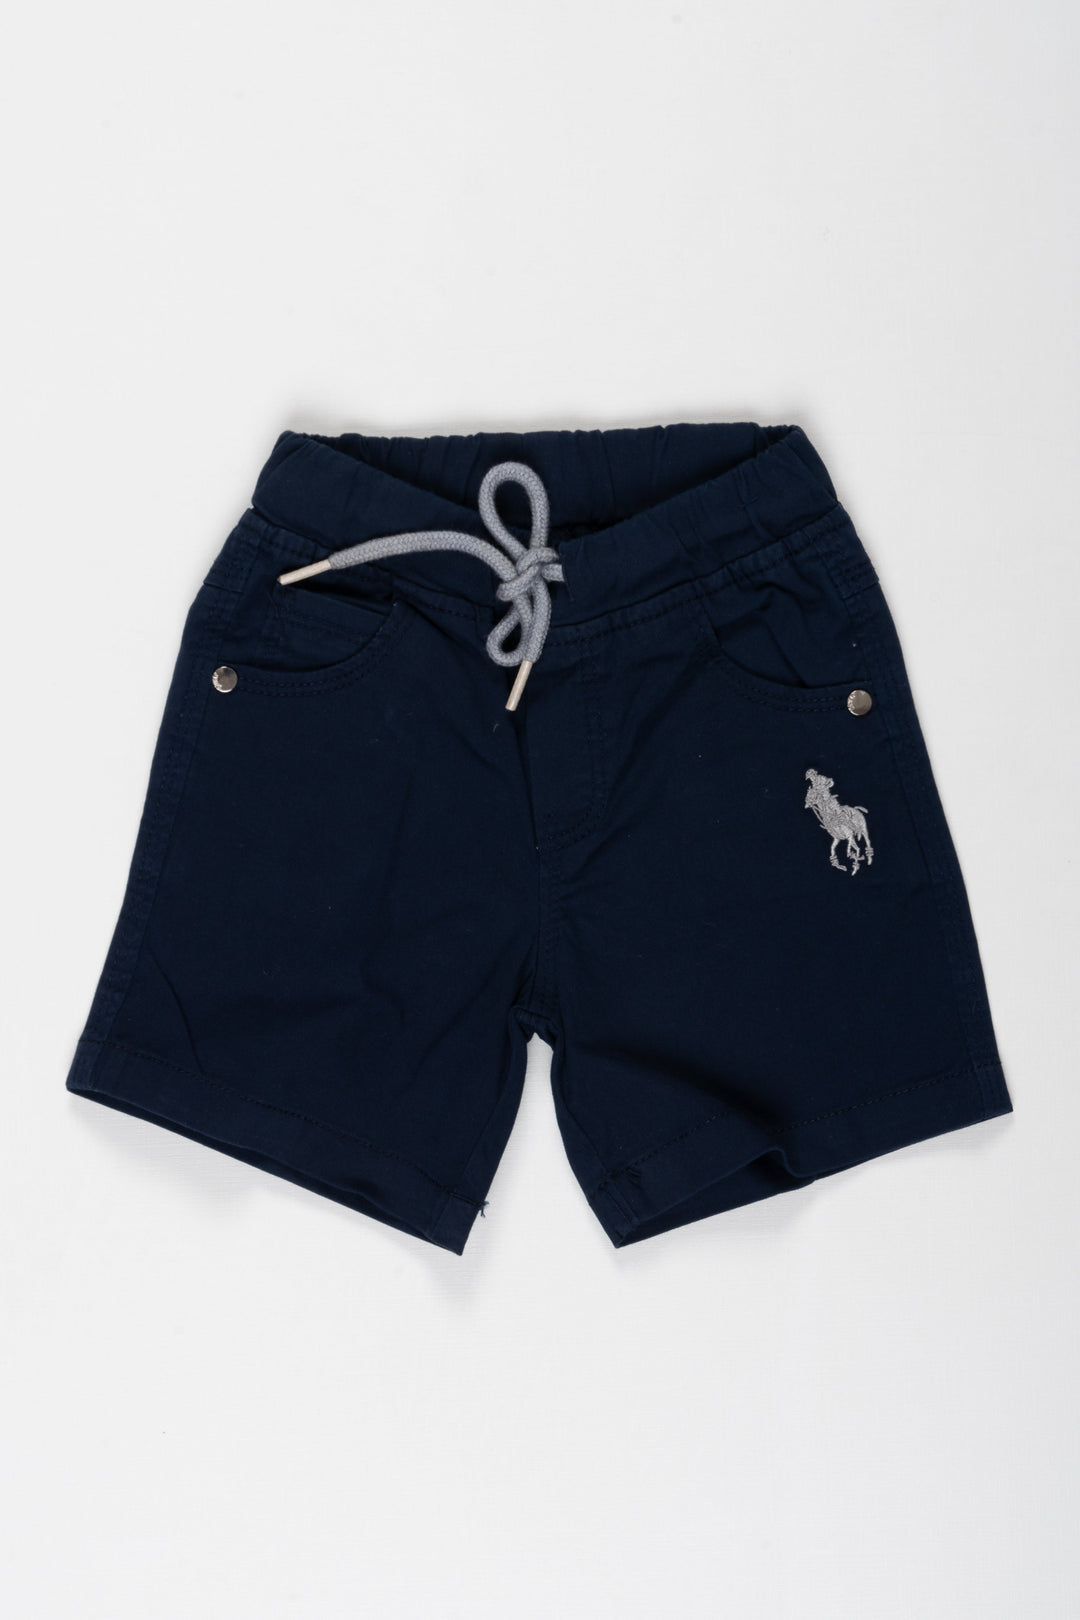 The Nesavu Boys Shorts Nautical Navy Boys Essential Summer Shorts Nesavu 18 (2Y) / Blue / Cotton BWS001H-18 Boys Navy Drawstring Shorts | Versatile  Comfortable | The Nesavu